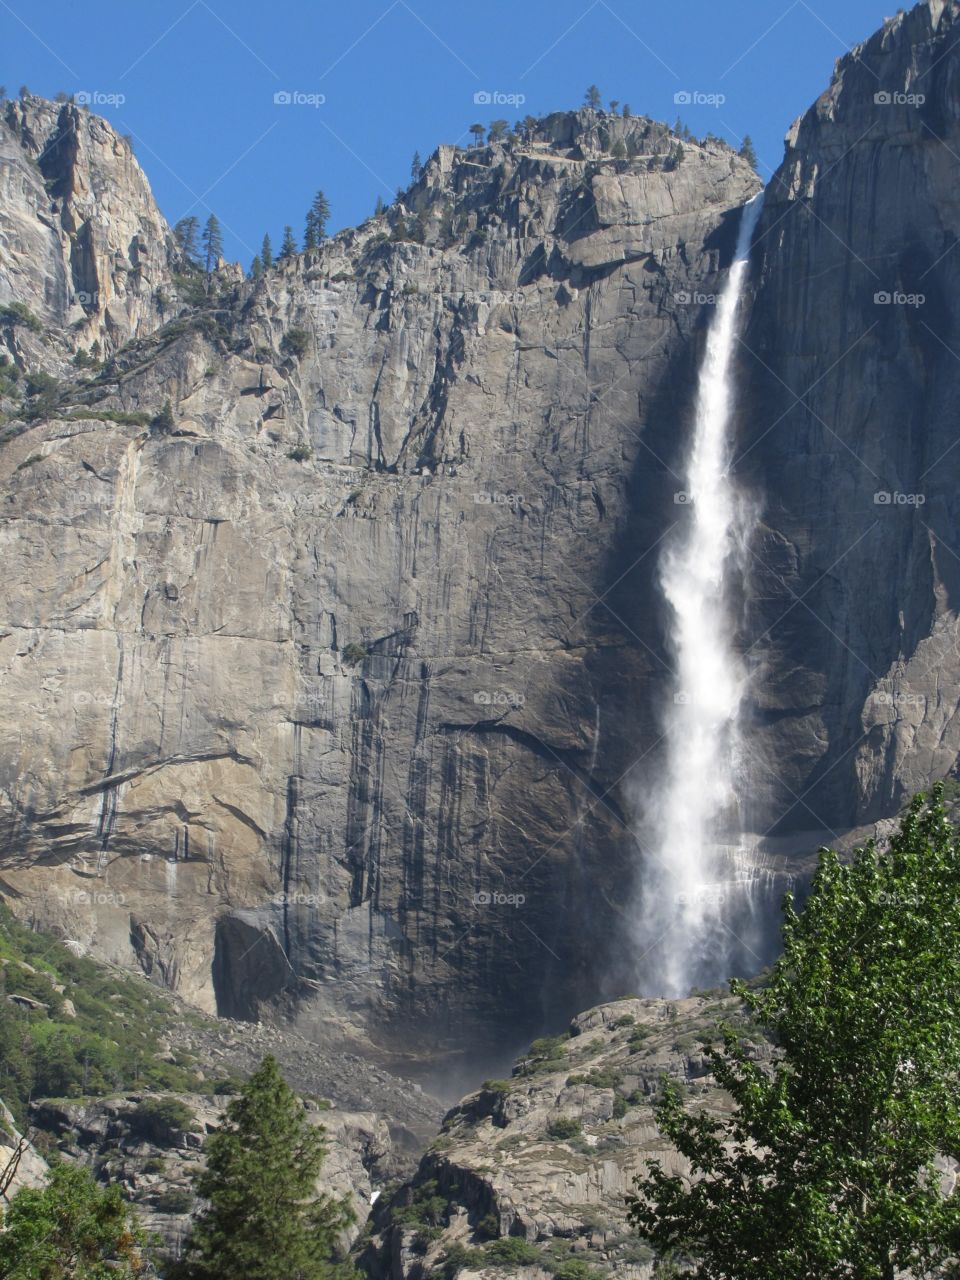 Upper Yosemite falls. Upper Yosemite falls